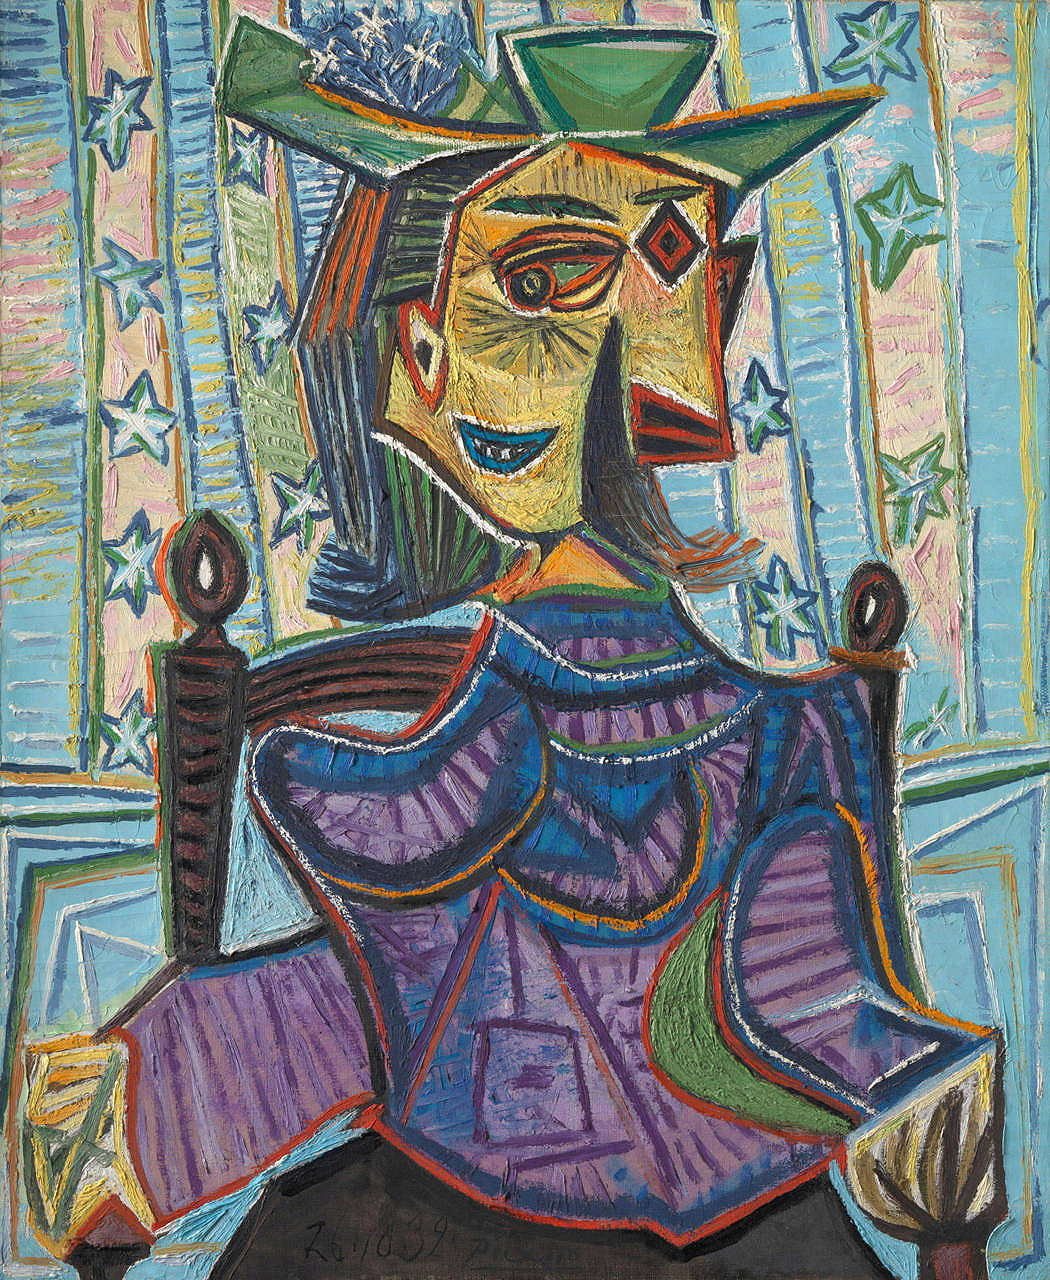 Dora Maar in einem Lehnstuhl by Pablo Picasso - 1939 - 73.3 x 60.3 cm Metropolitan Museum of Art